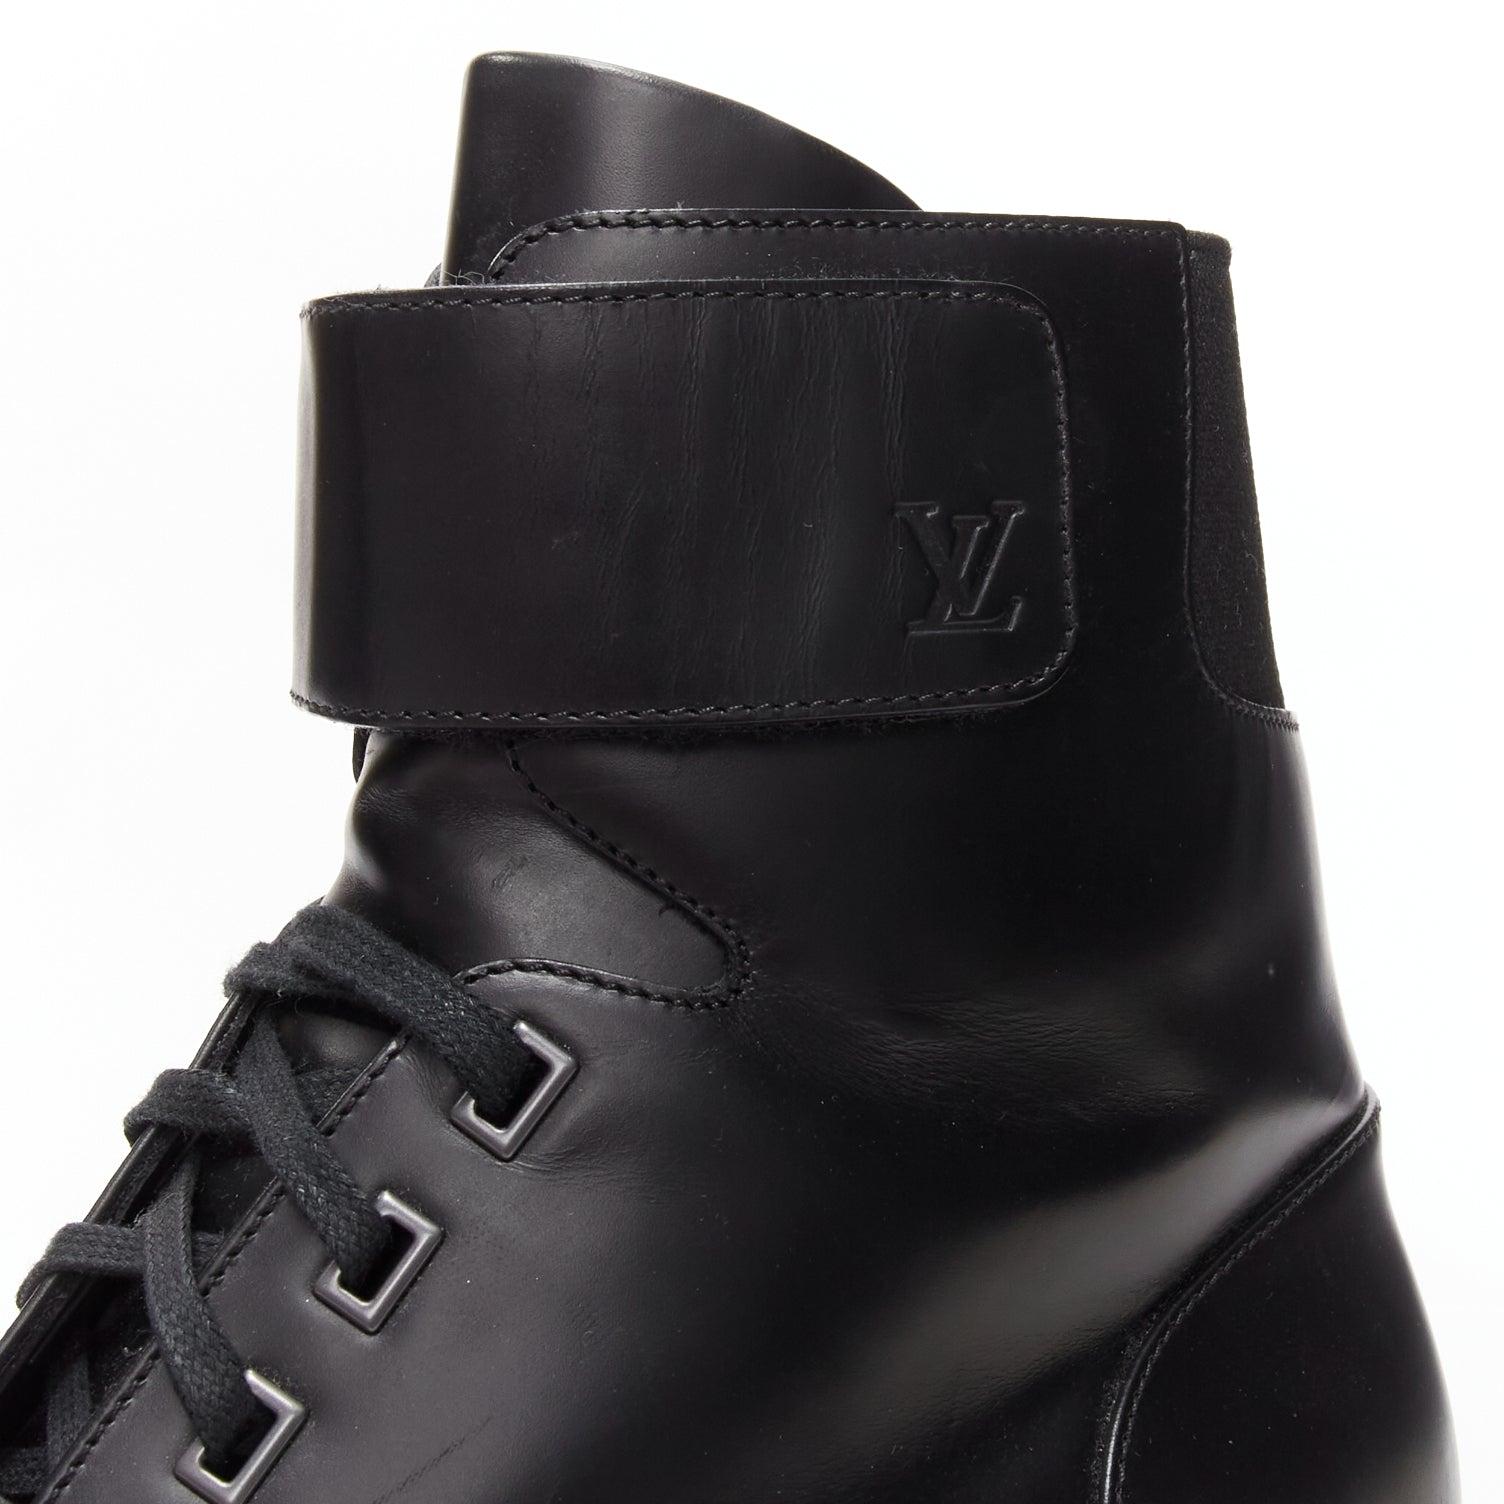 LOUIS VUITTON Sword black leather LV logo hiking lace up boots UK7.5 EU41.5 For Sale 4